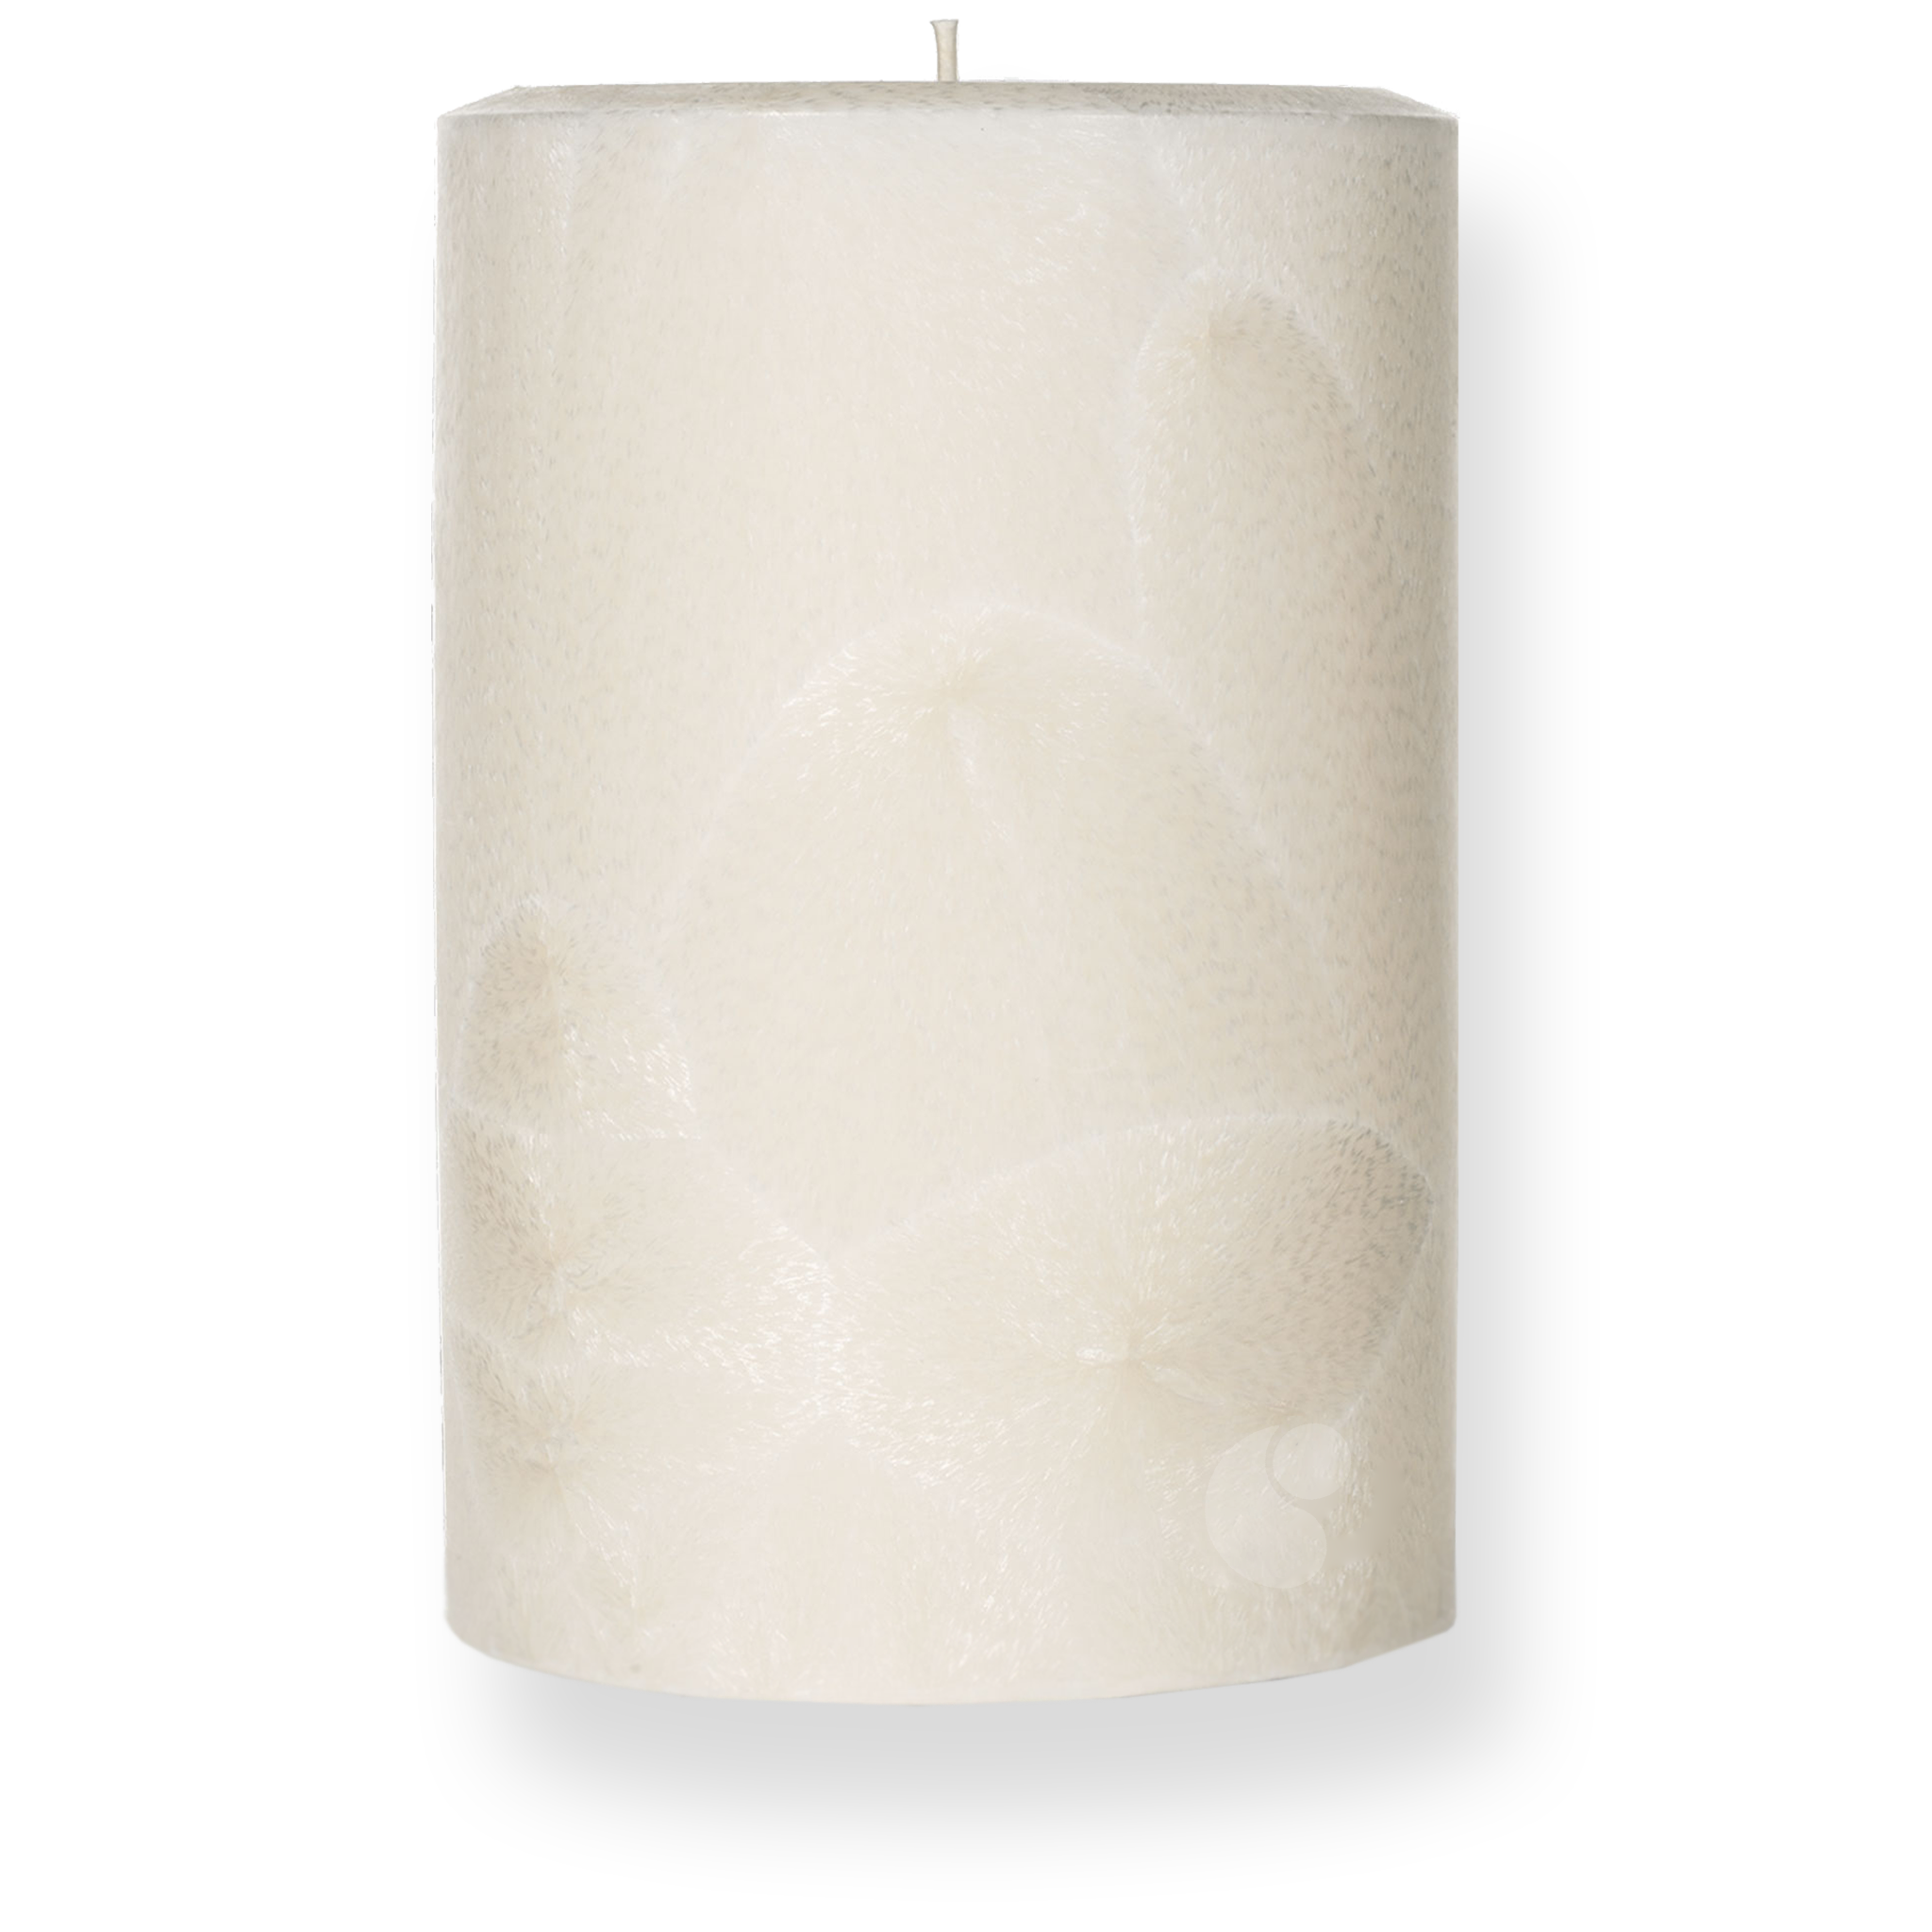 Snow Day · Pillar Candle